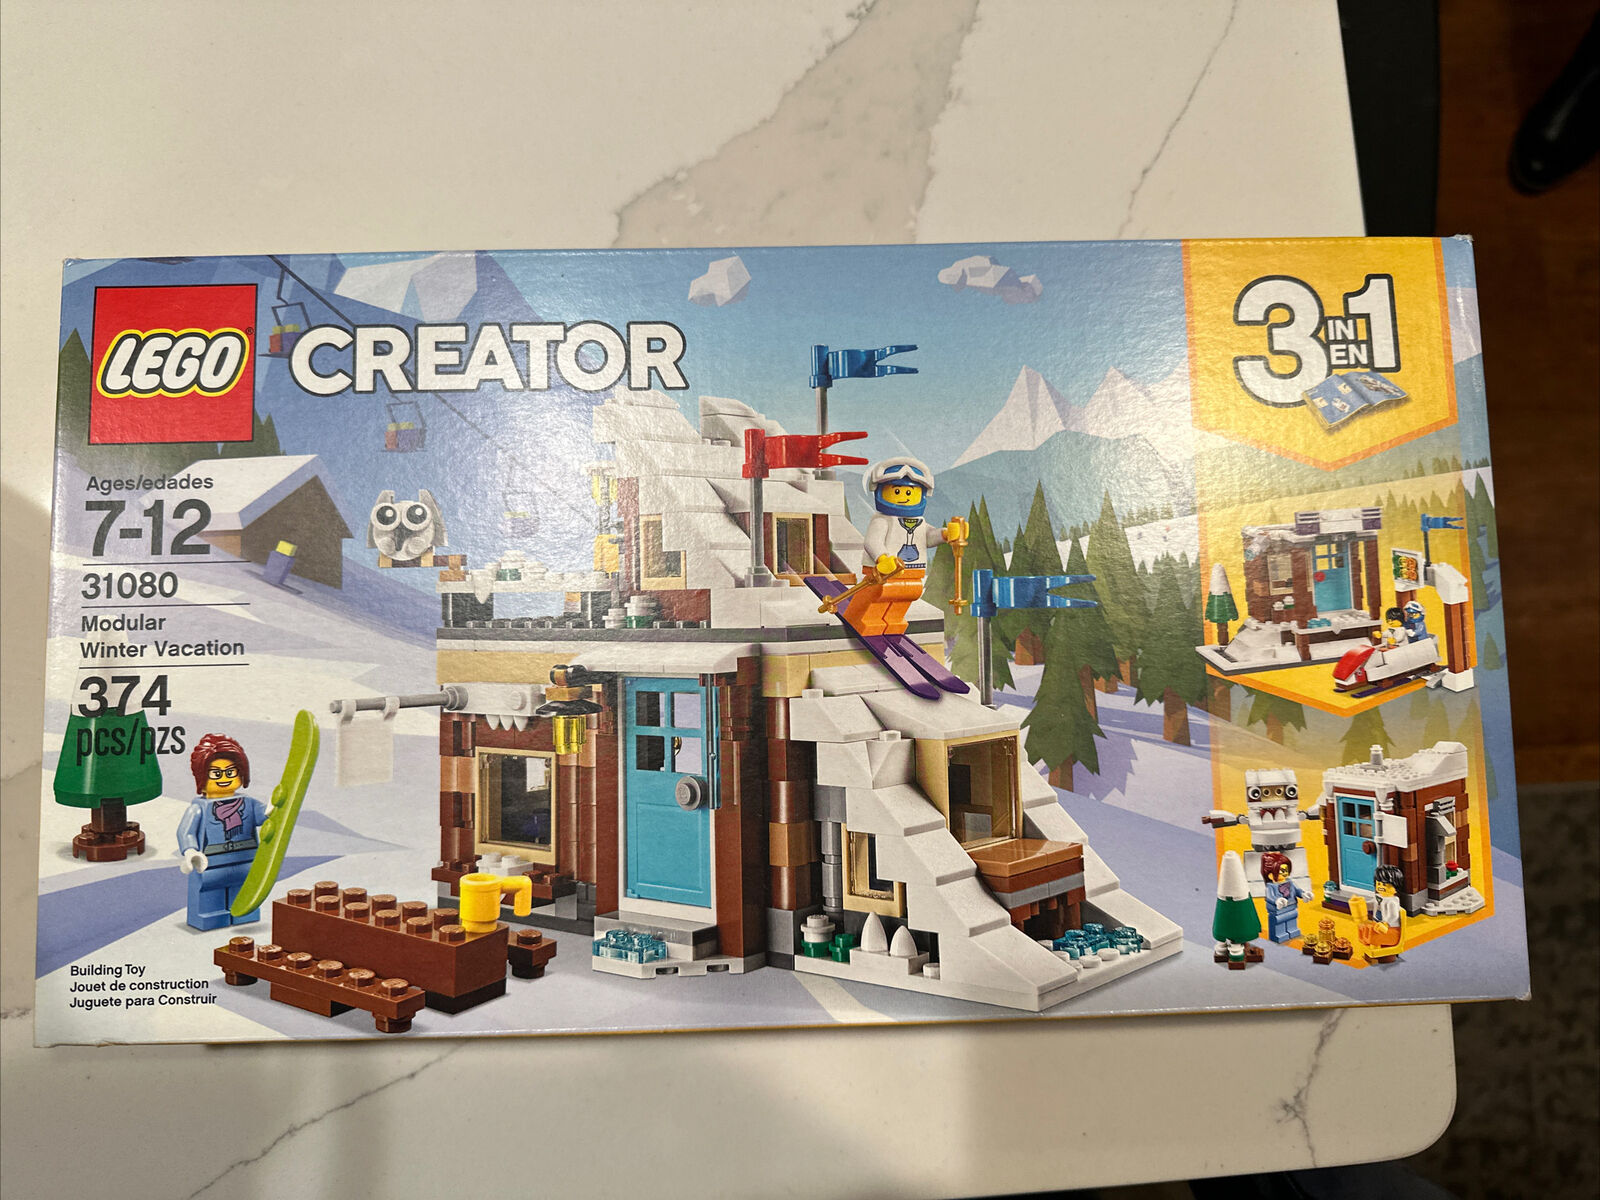 LEGO Creator Modular Winter Vacation 2018 (31080) Building Kit 374 Pcs